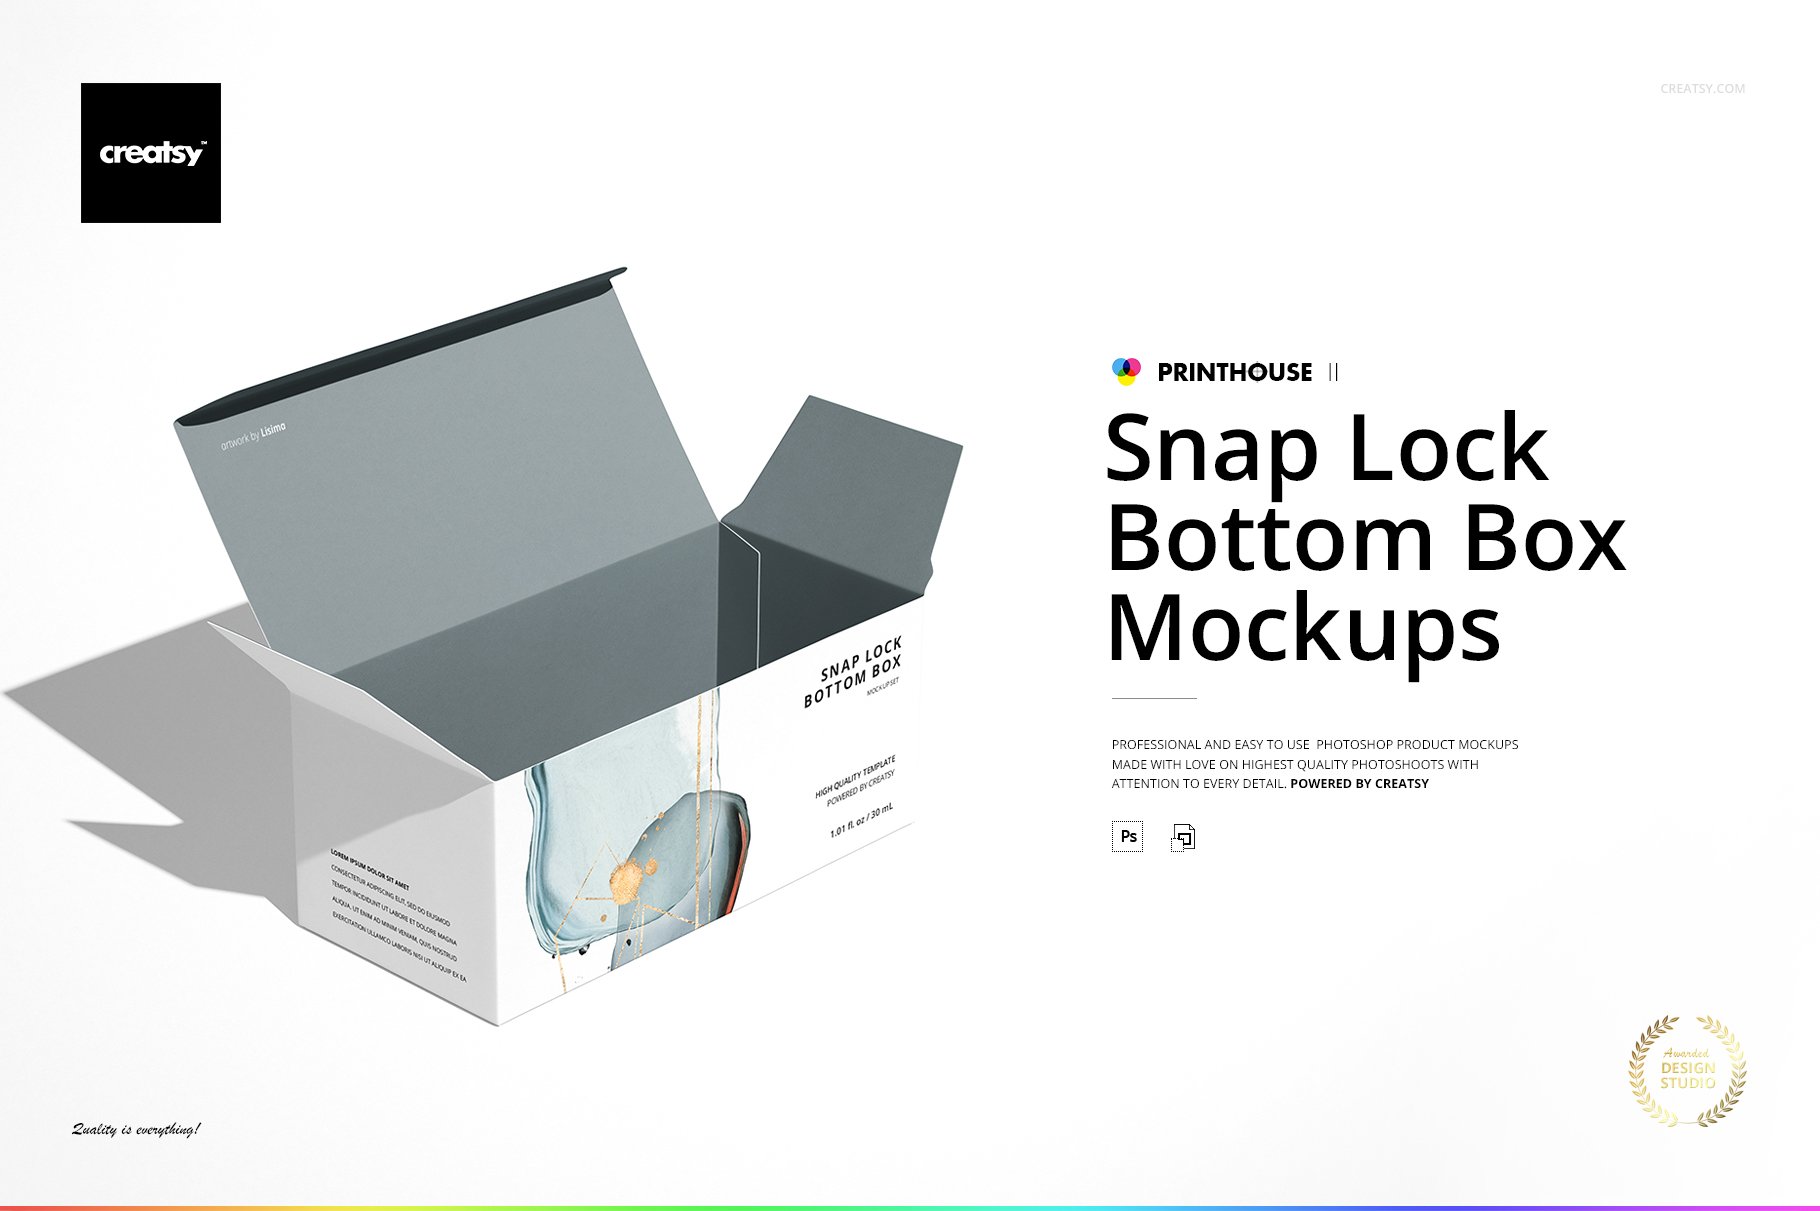 Snap Lock Bottom Box Mockup Set cover image.